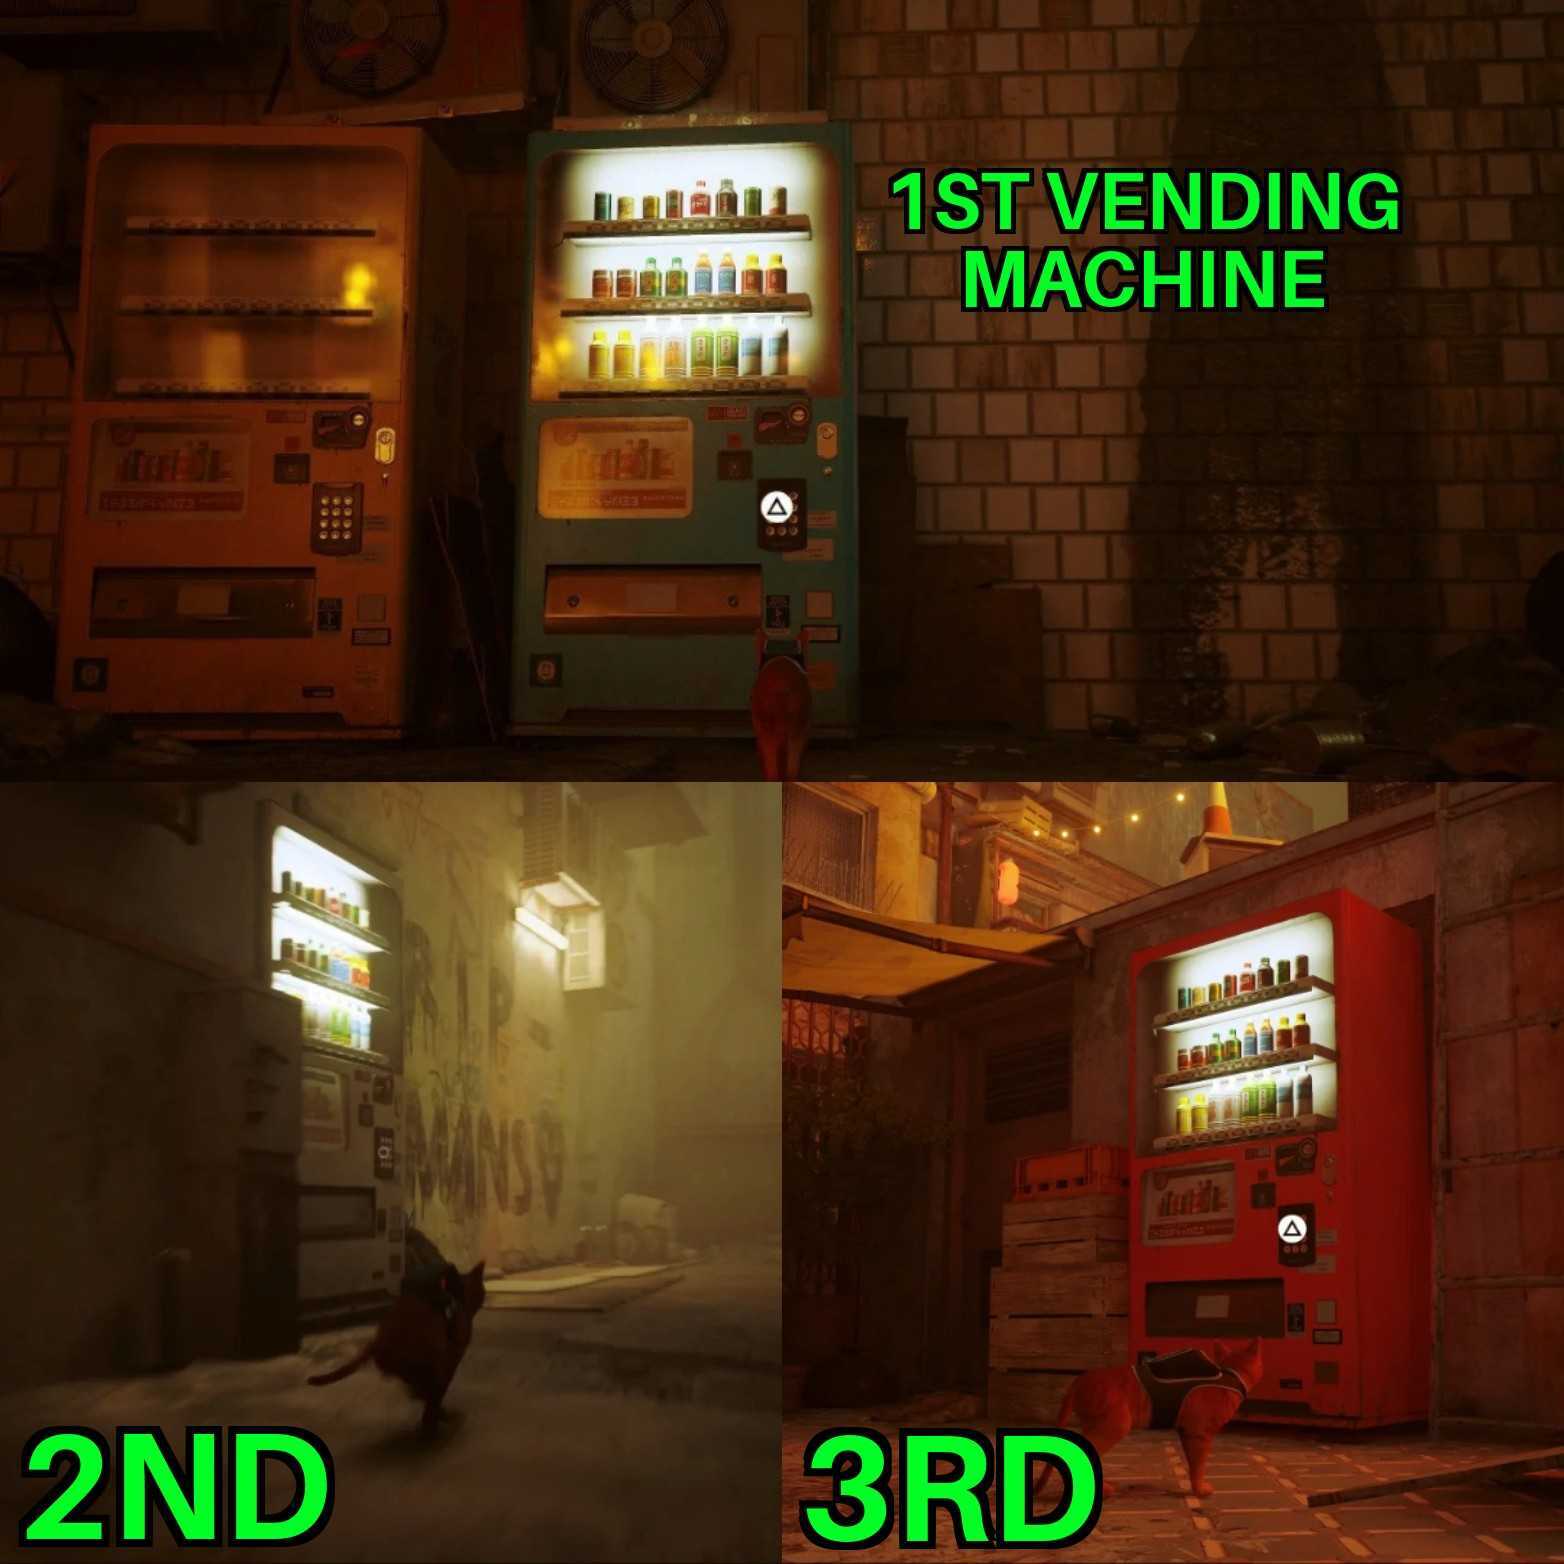 Stray Vending machines